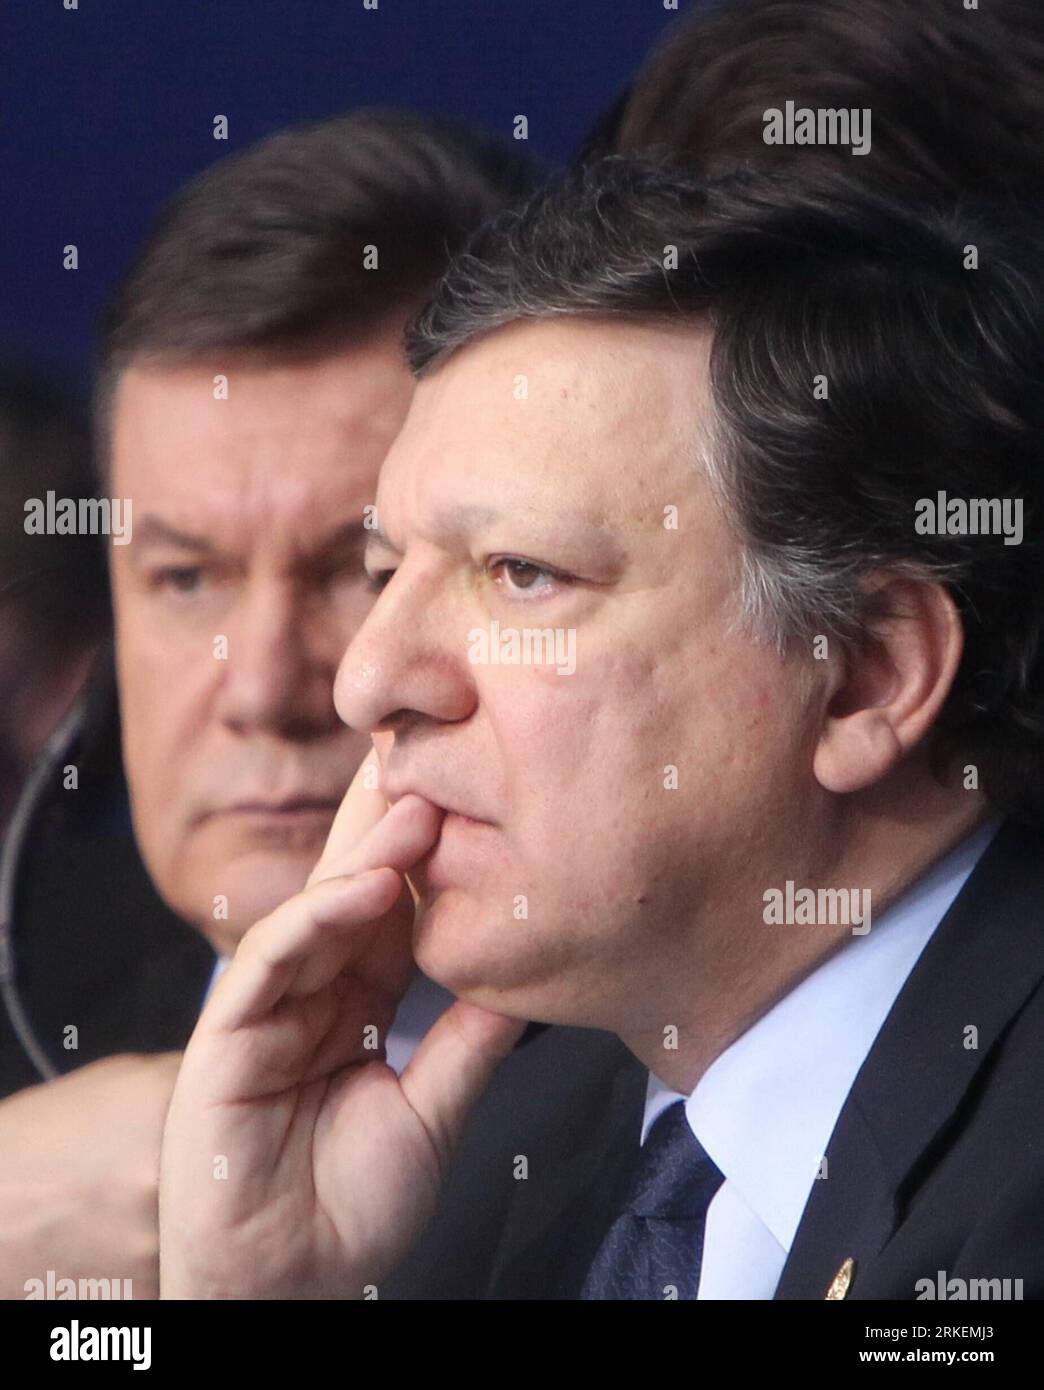 Bildnummer: 55274527  Datum: 19.04.2011  Copyright: imago/Xinhua (110419) -- KIEV, April 19, 2011 (Xinhua) -- European Commission President Jose Manuel Barroso (front) and Ukrainian President Viktor Yanukovich (rear) attend the Kiev Summit on safe and innovative use of nuclear energy in Kiev, capital of Ukraine, April 19, 2011. (Xinhua/Lu Jinbo) (lyi) UKRAINE-KIEV-NUCLEAR-SUMIT PUBLICATIONxNOTxINxCHN Politik People Atomenergie Tschernobylkonferenz Konferenz atomare Sicherheit kbdig xub 2011 hoch premiumd     Bildnummer 55274527 Date 19 04 2011 Copyright Imago XINHUA  Kiev April 19 2011 XINHUA Stock Photo